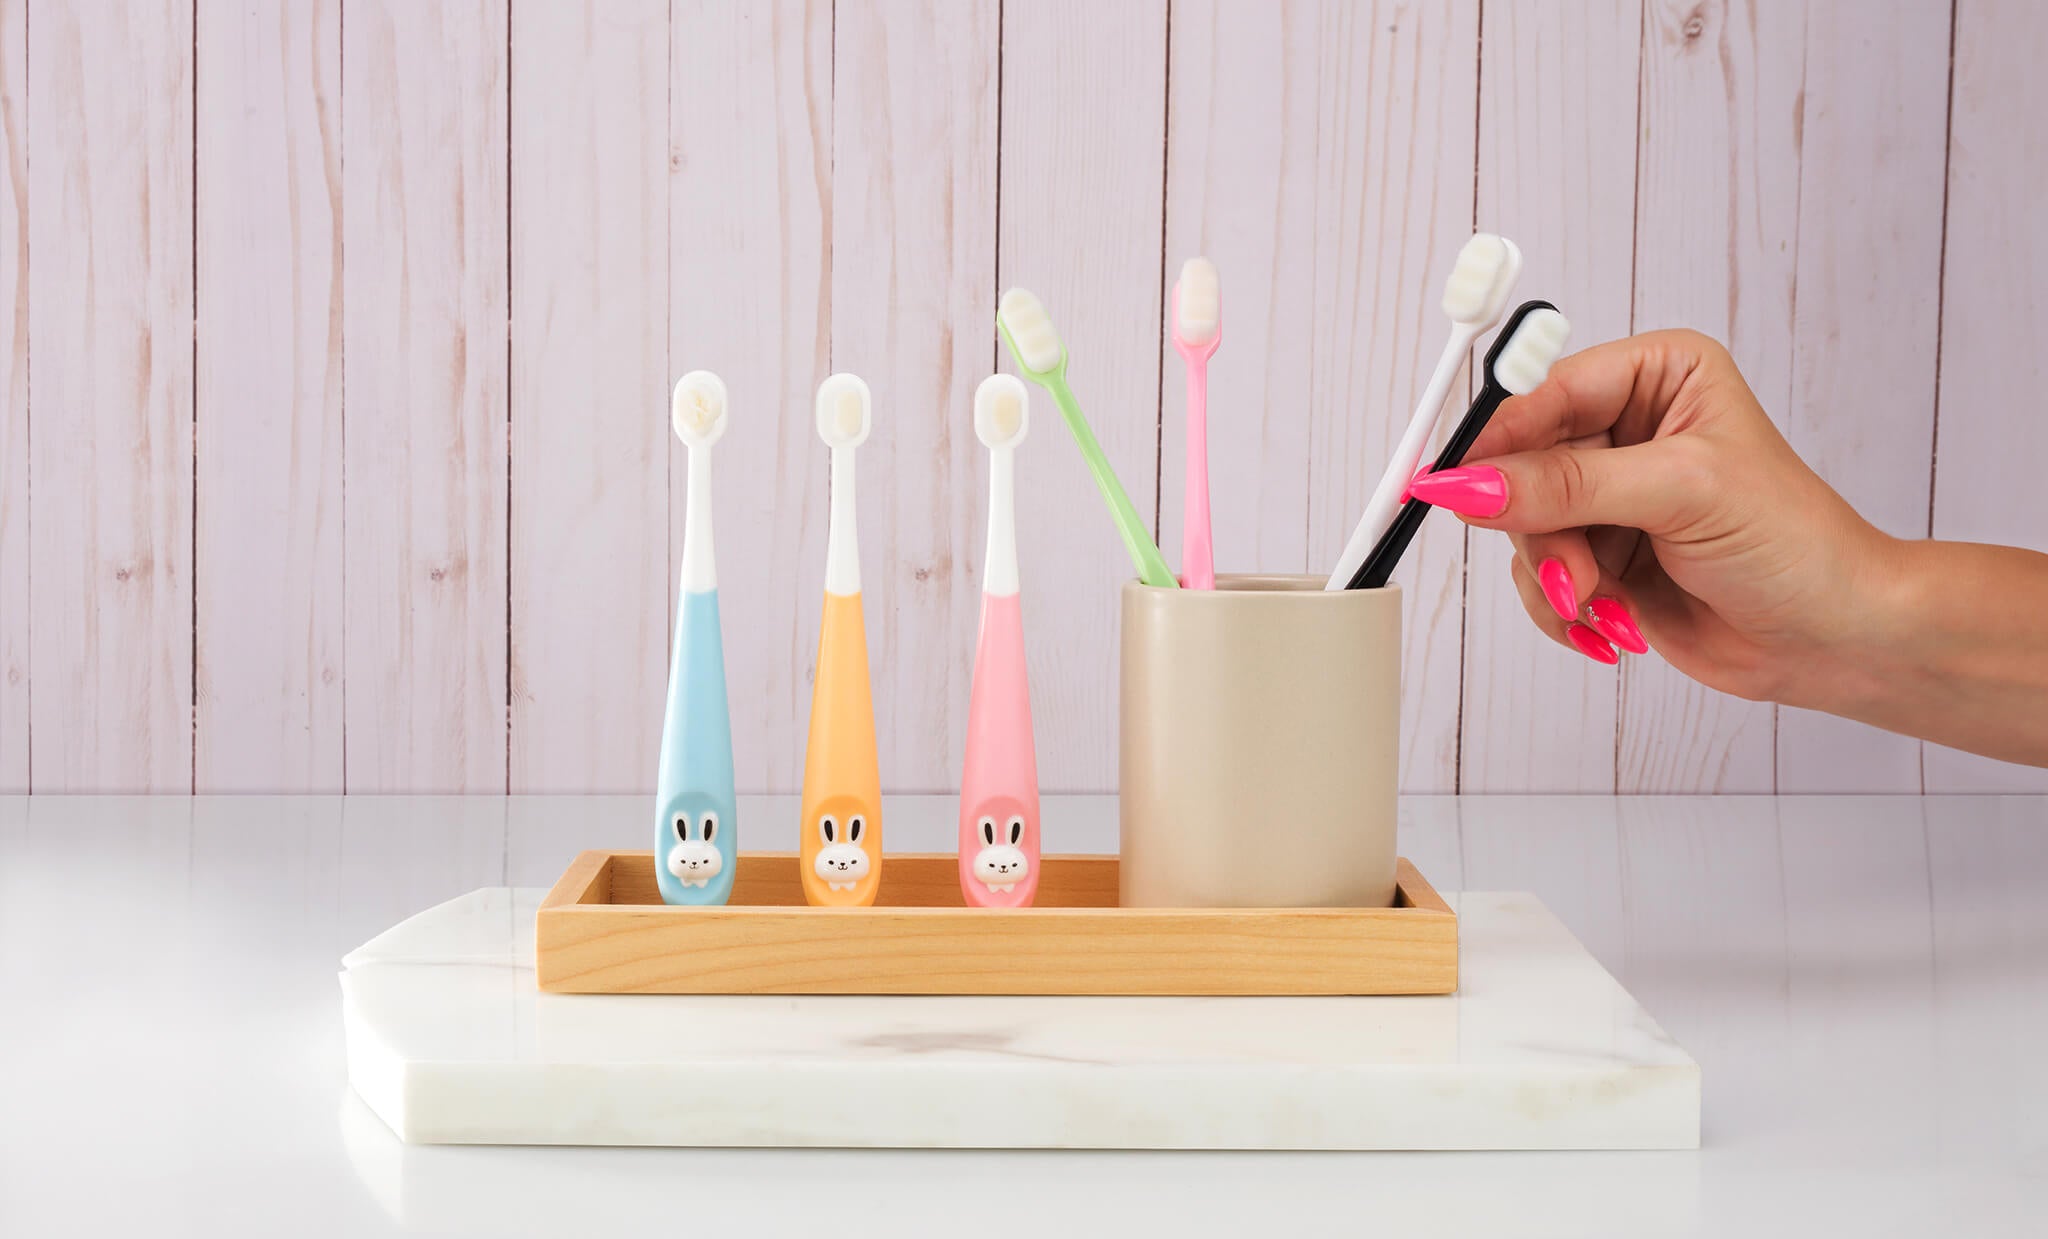 BREVI™ 4-Pack Family Nordic-Inspired Premium Nano Toothbrush